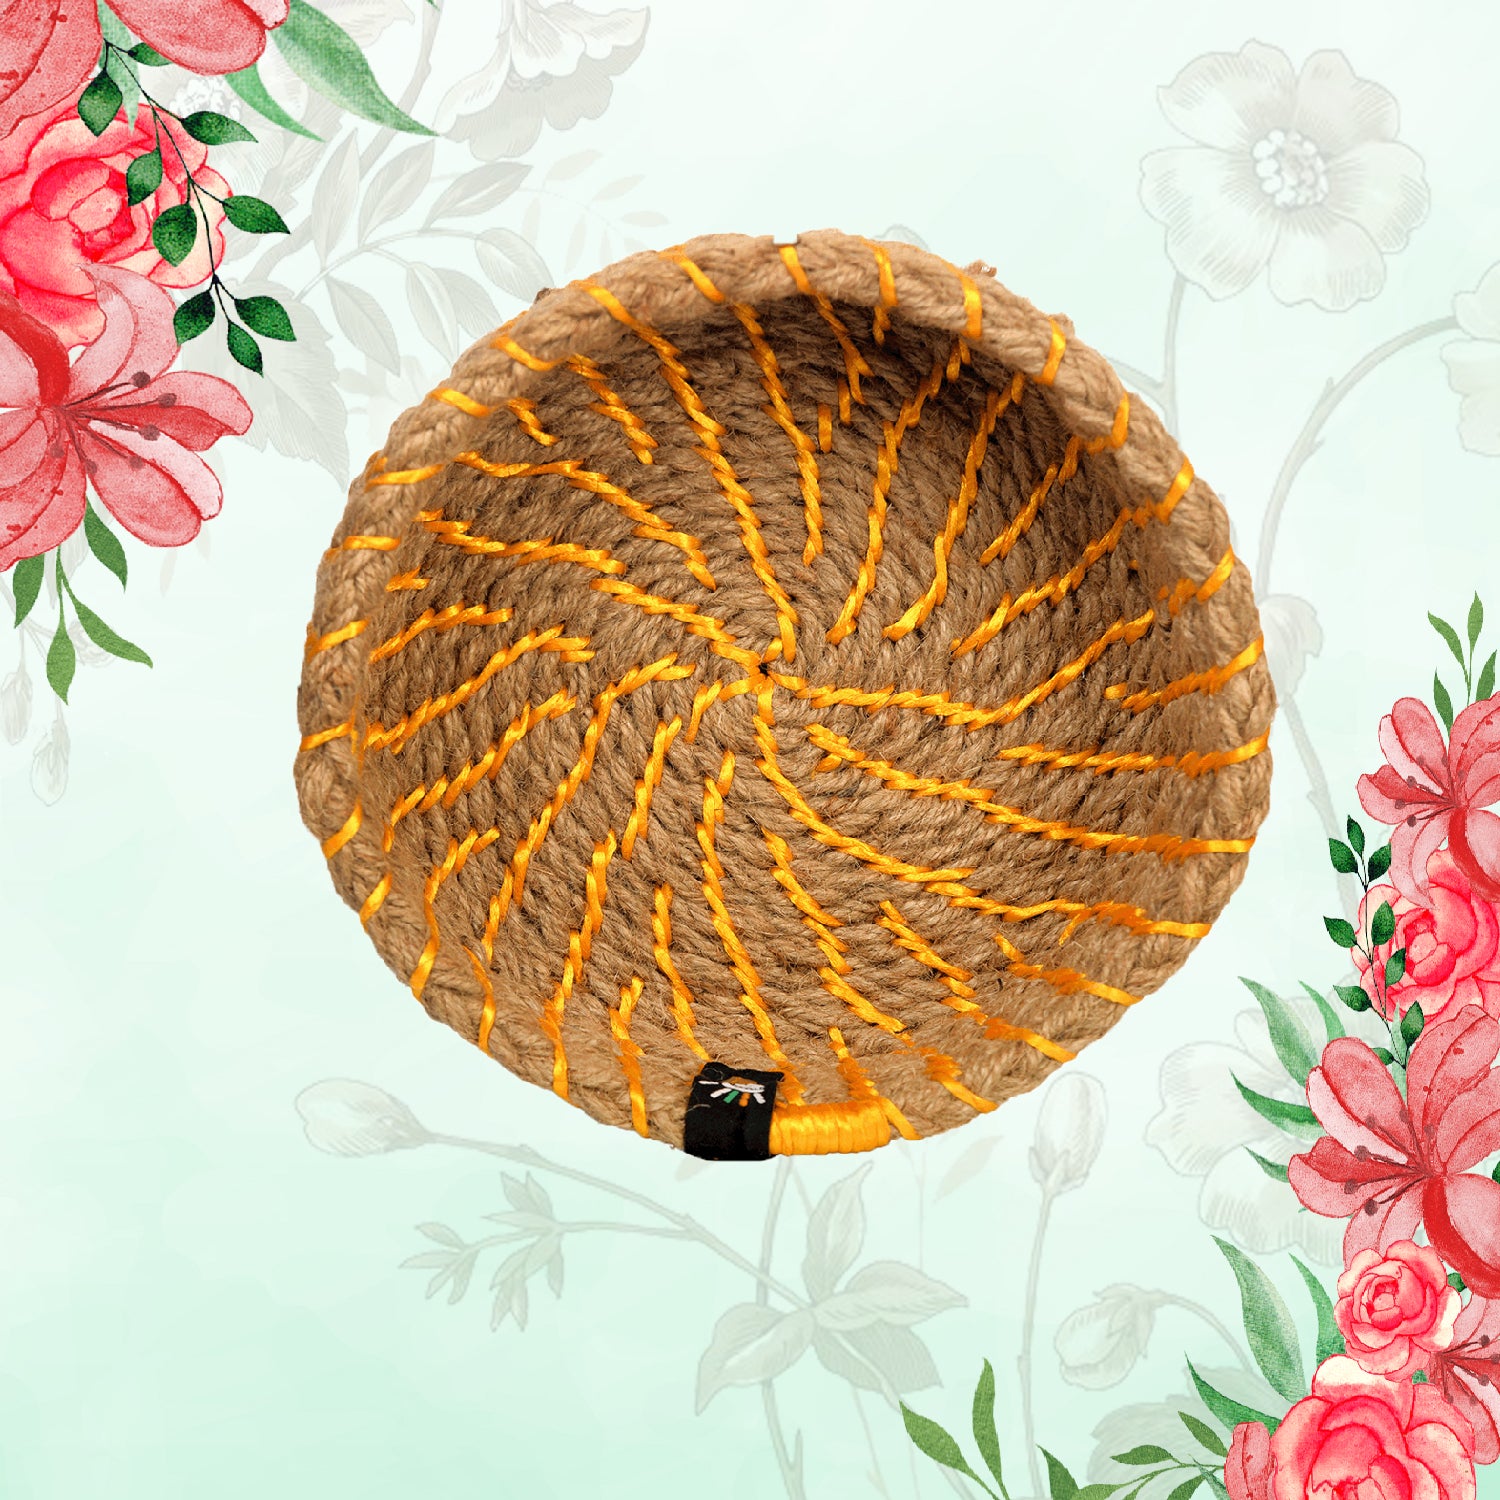 Happy Cultures 'Mustard' Jute Braided Basket